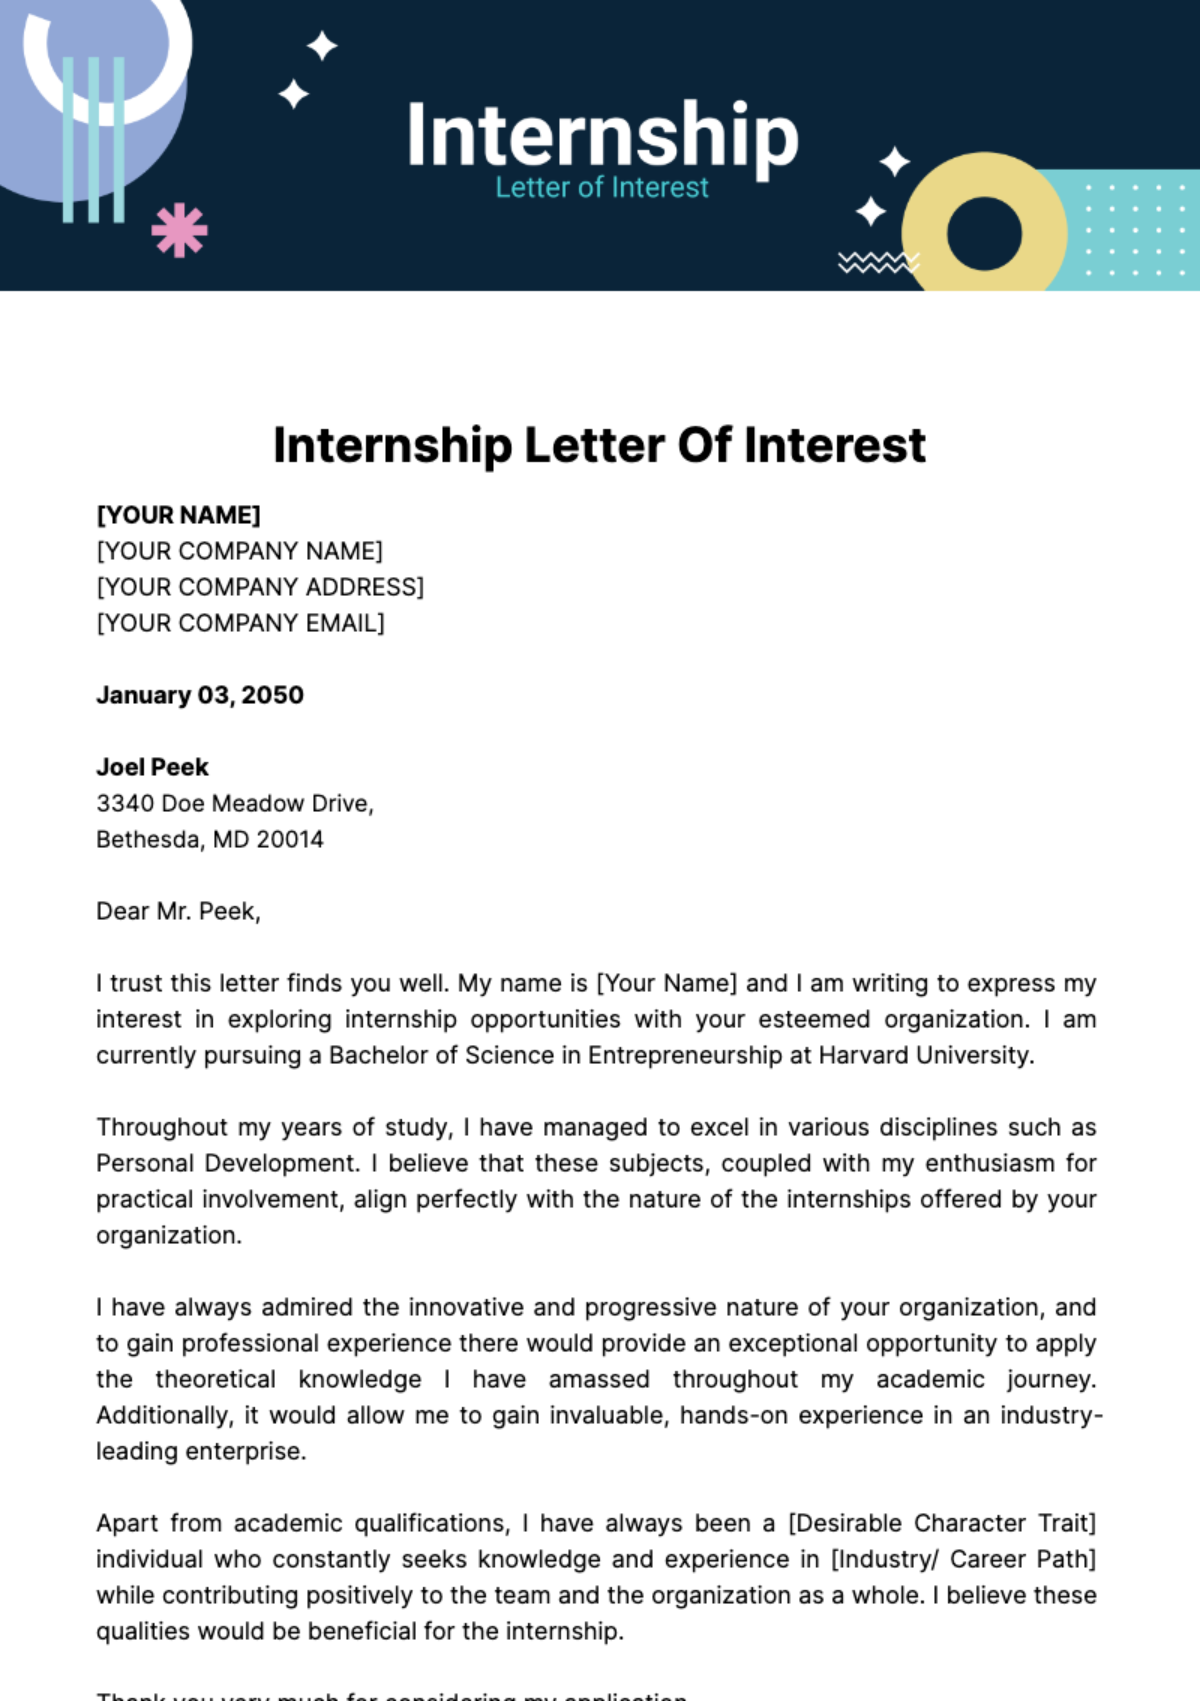 Internship Letter of Interest Template